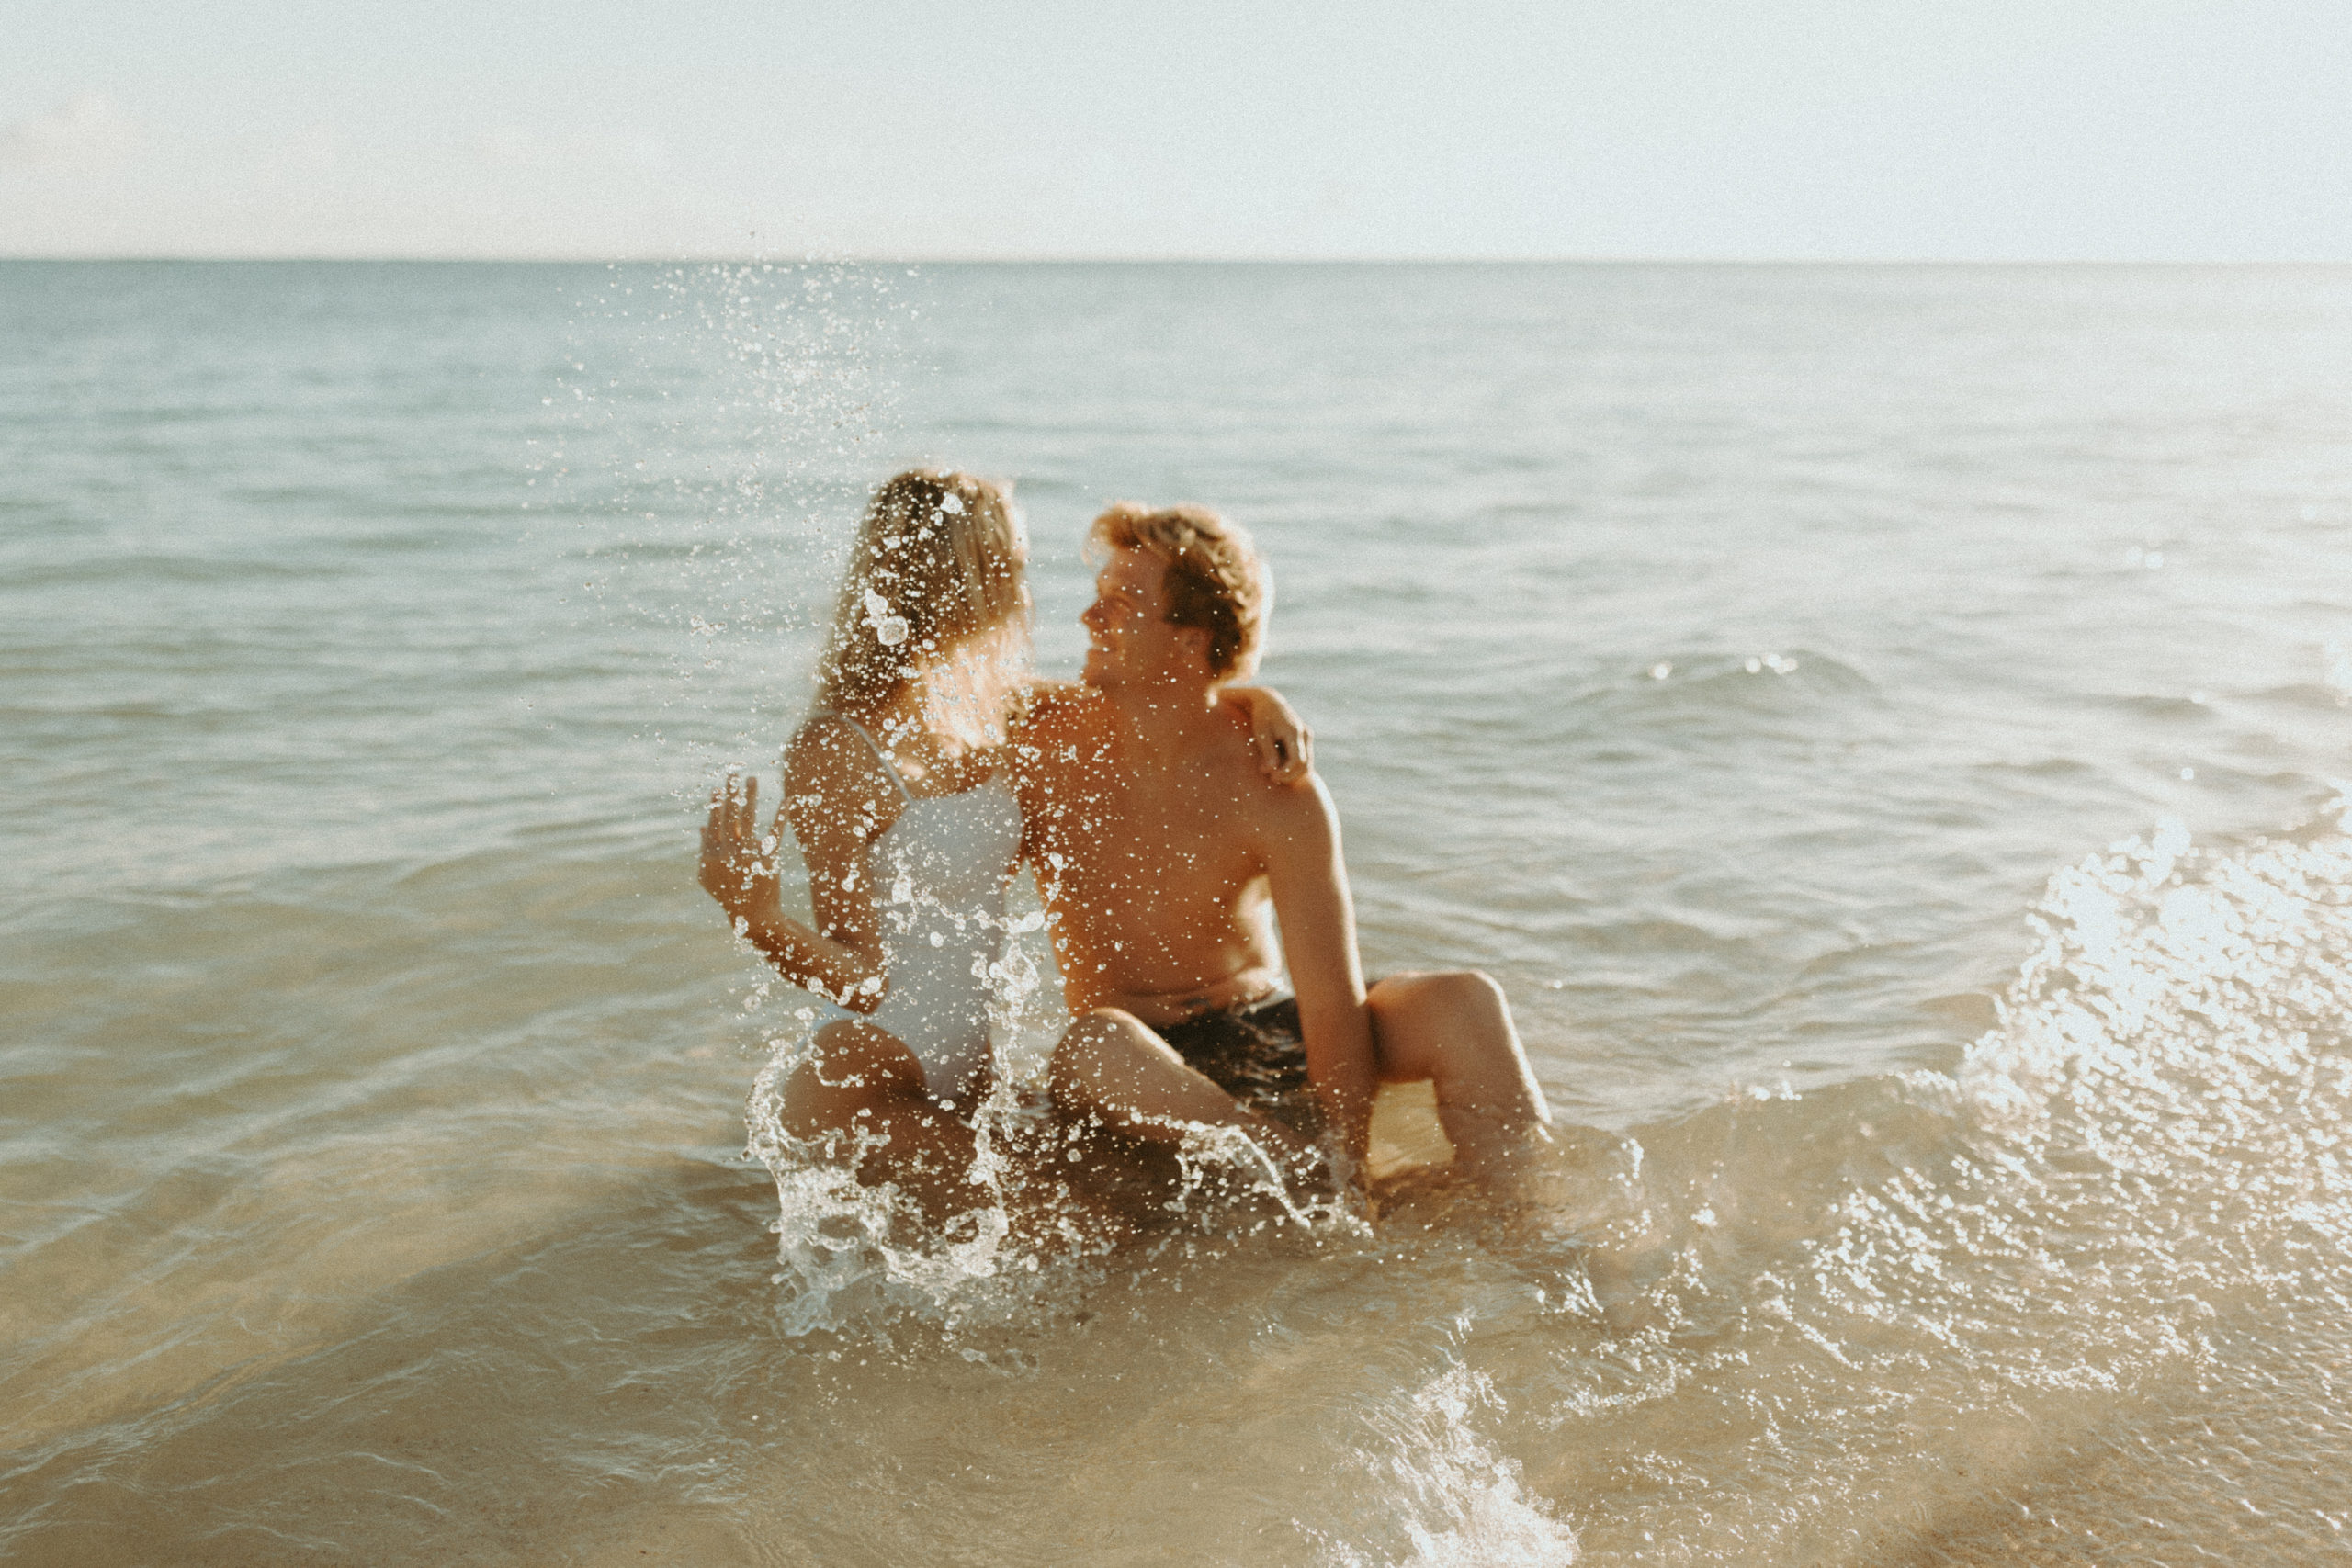 the couple splashing in the ocean as a sunrise photoshoot couple idea